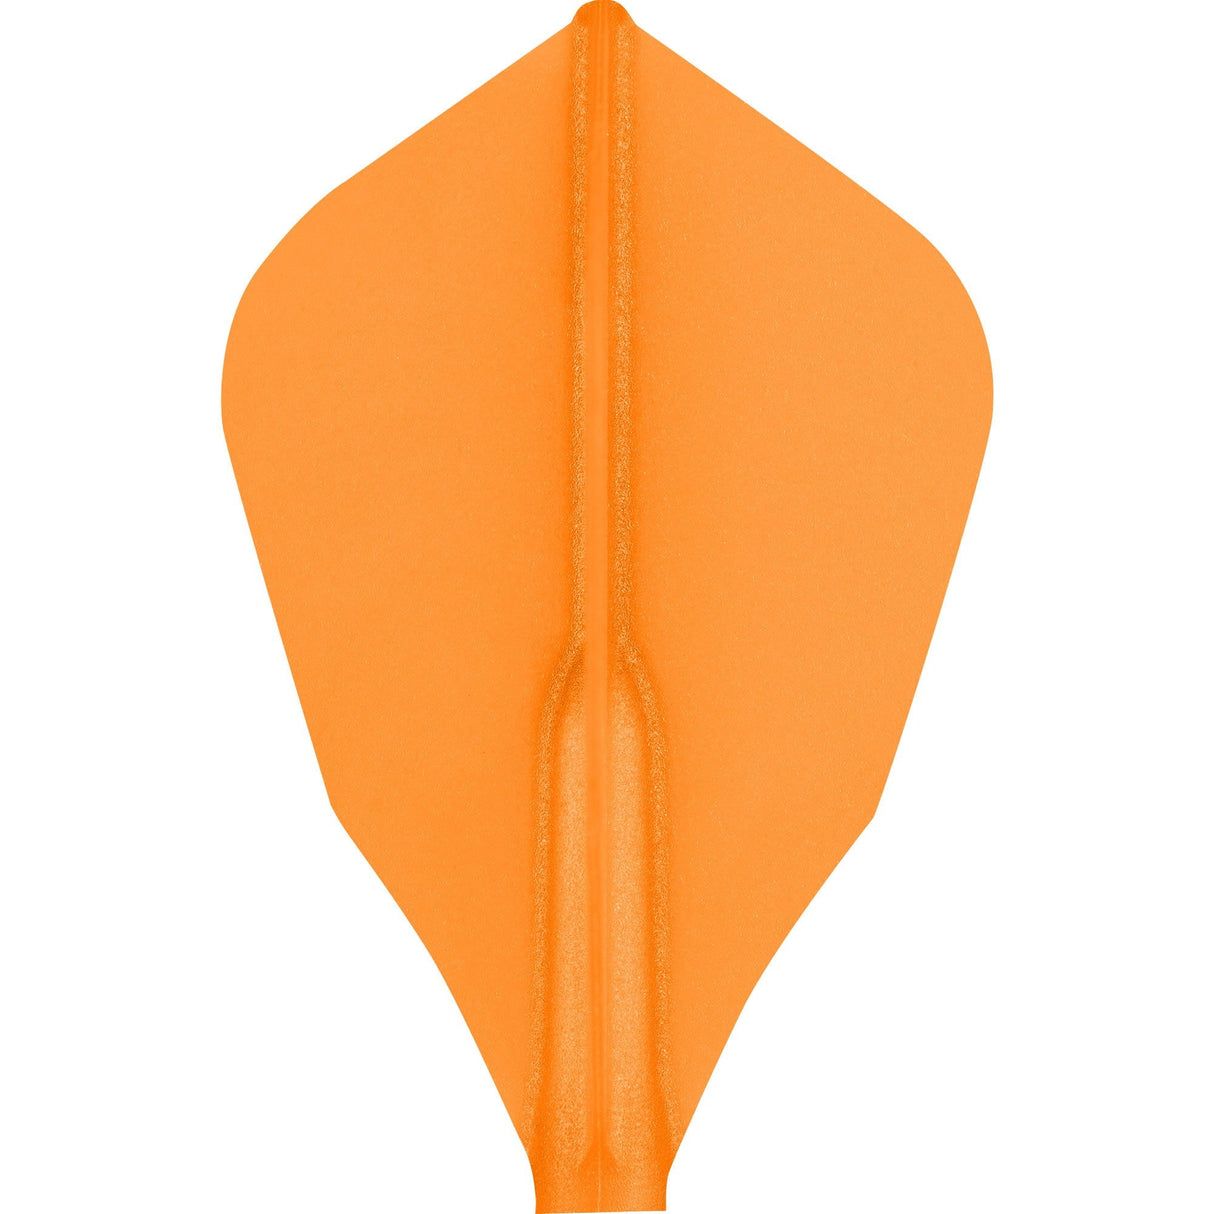 Cosmo Darts - Fit Flight - Set of 3 - W Shape Orange